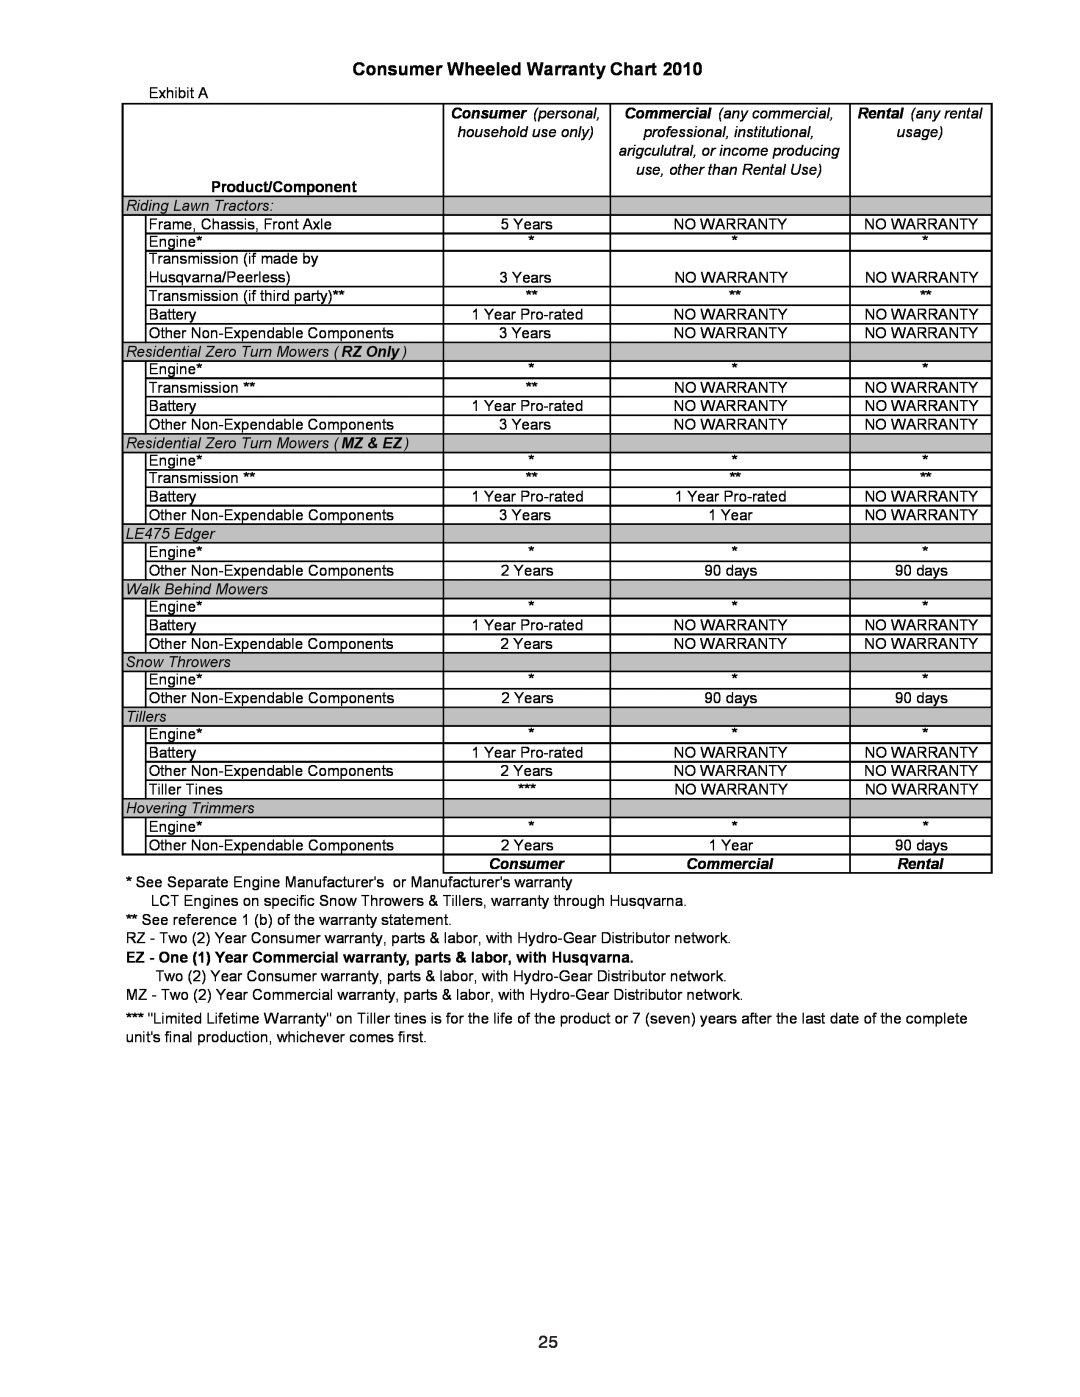 Husqvarna 1827EXLT warranty Consumer Wheeled Warranty Chart, Product/Component, Qjlqh 